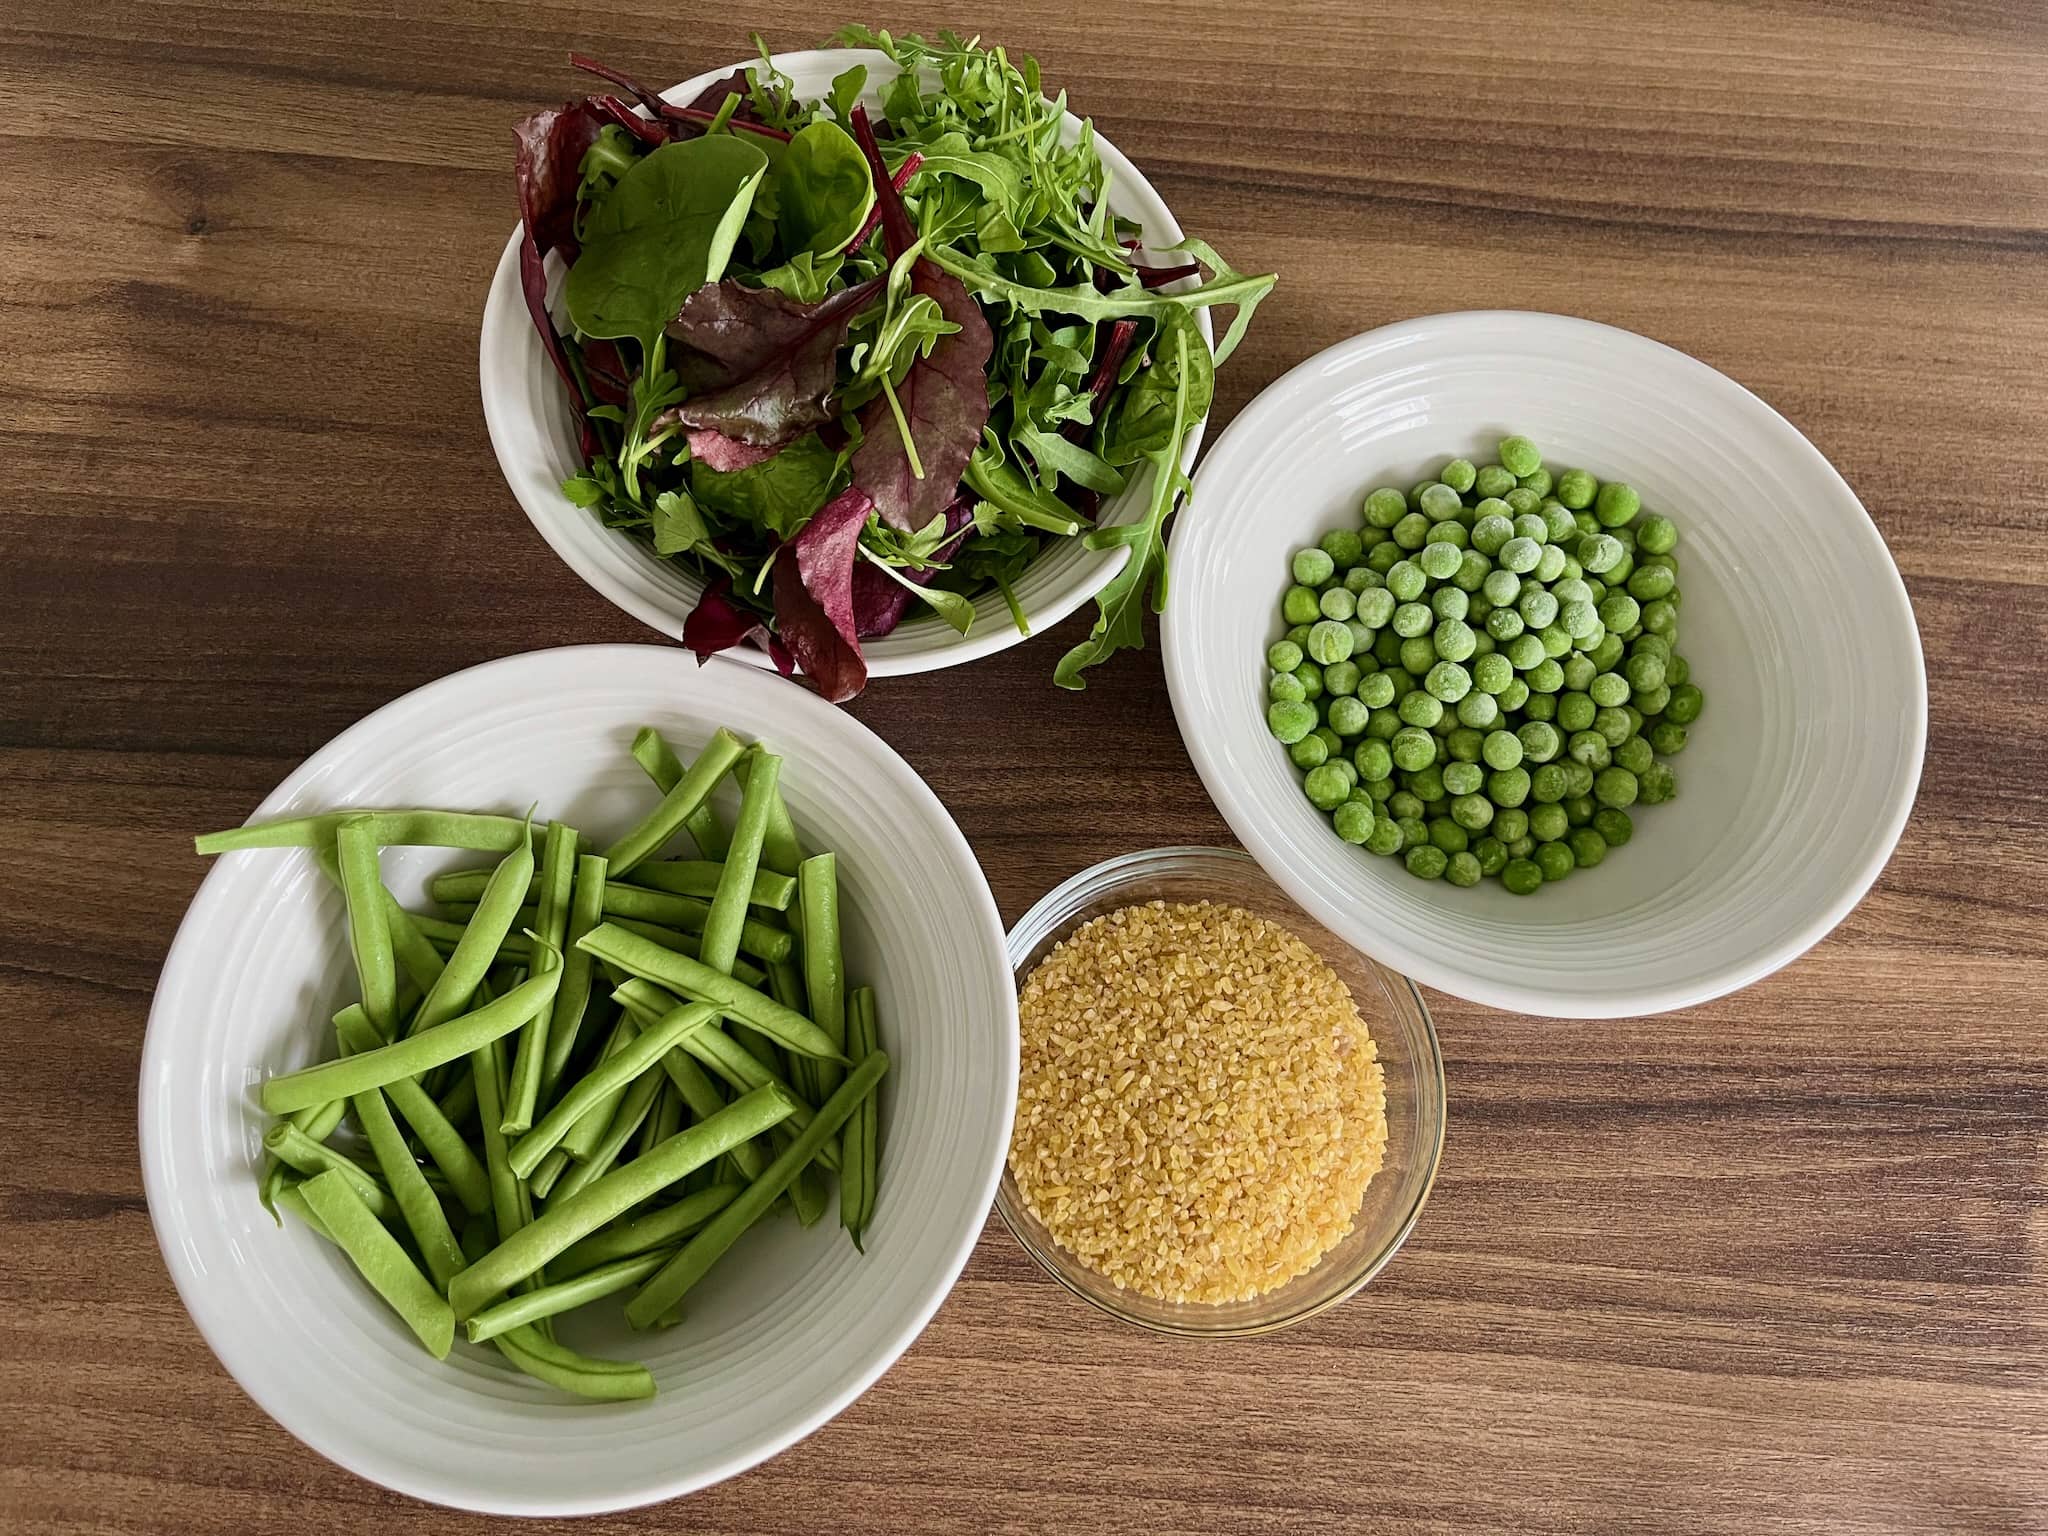 Main ingredients ready to use. Leaf salad, green beans, bulgur whear, garden peas